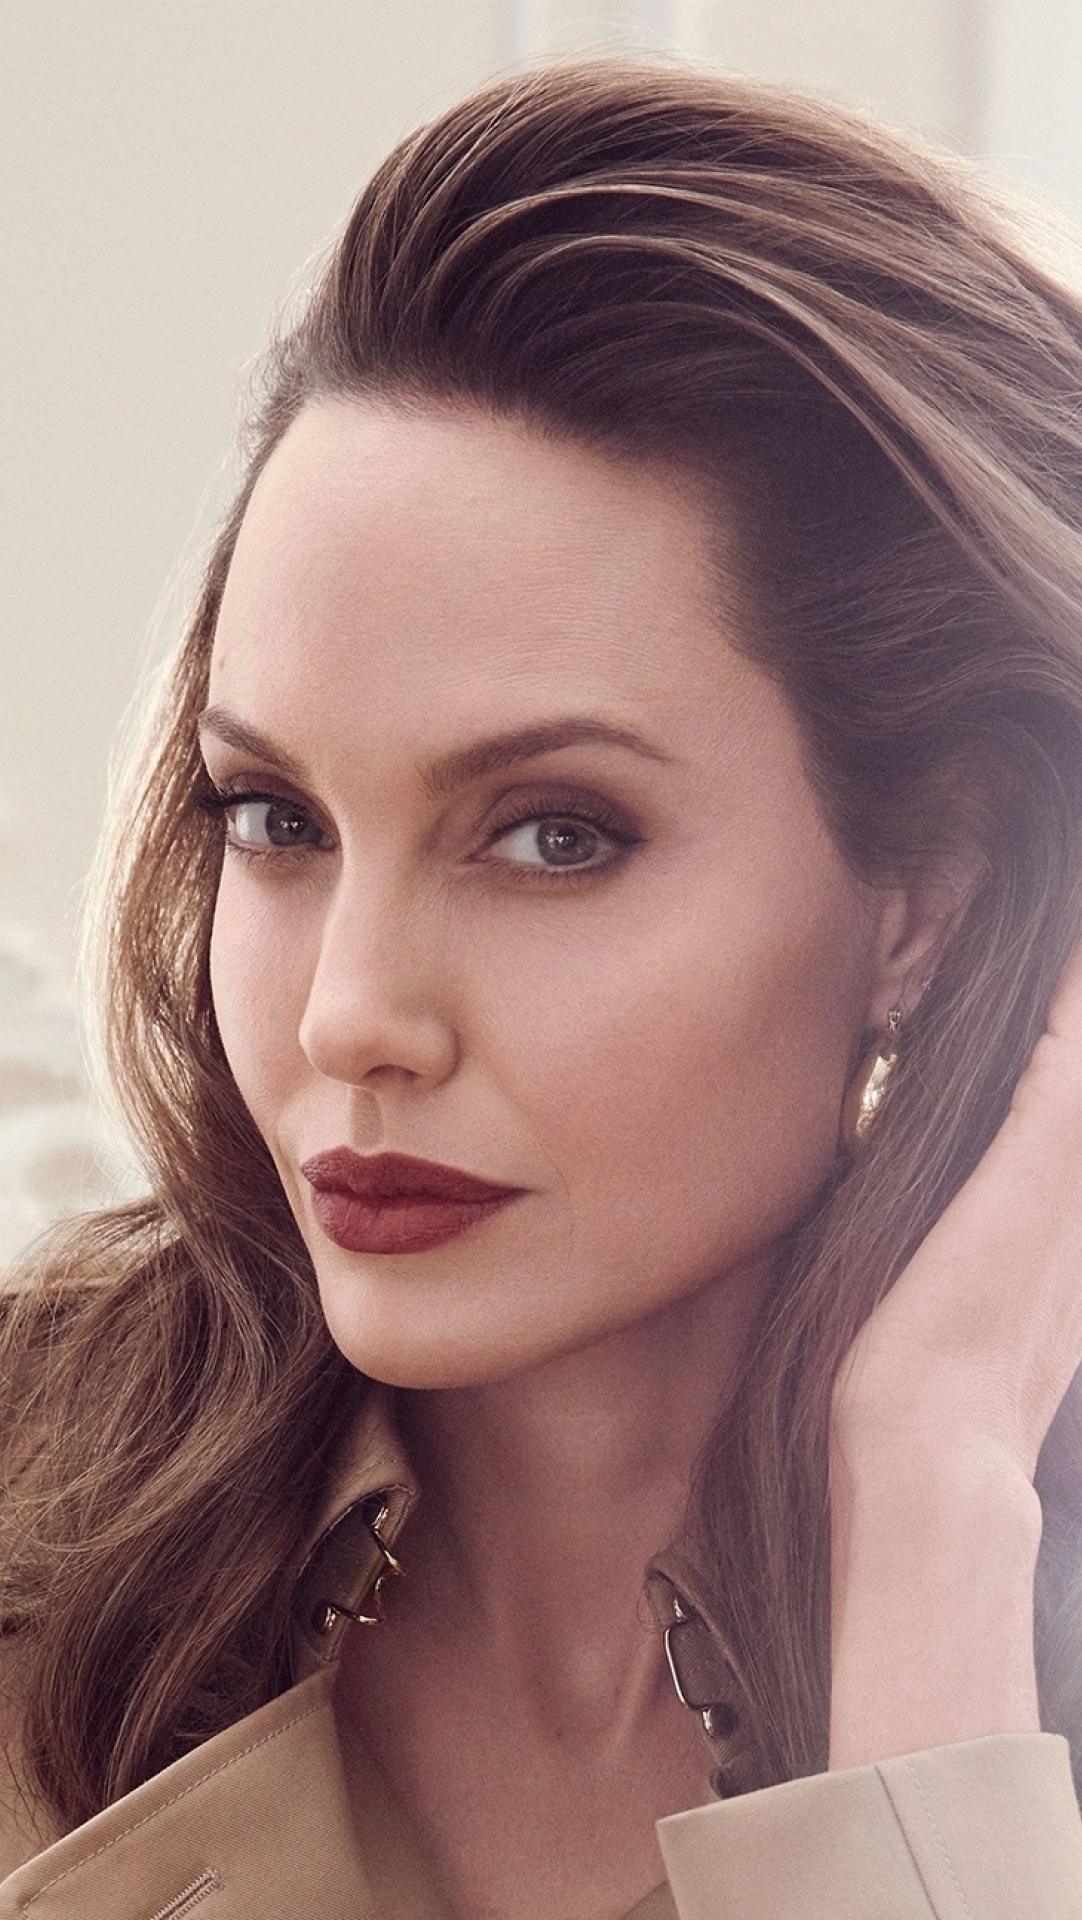 1082x1920 Angelina Jolie Face 2020 1082x1920 Resolution Wallpaper Hd Celebrities 4k Wallpapers 